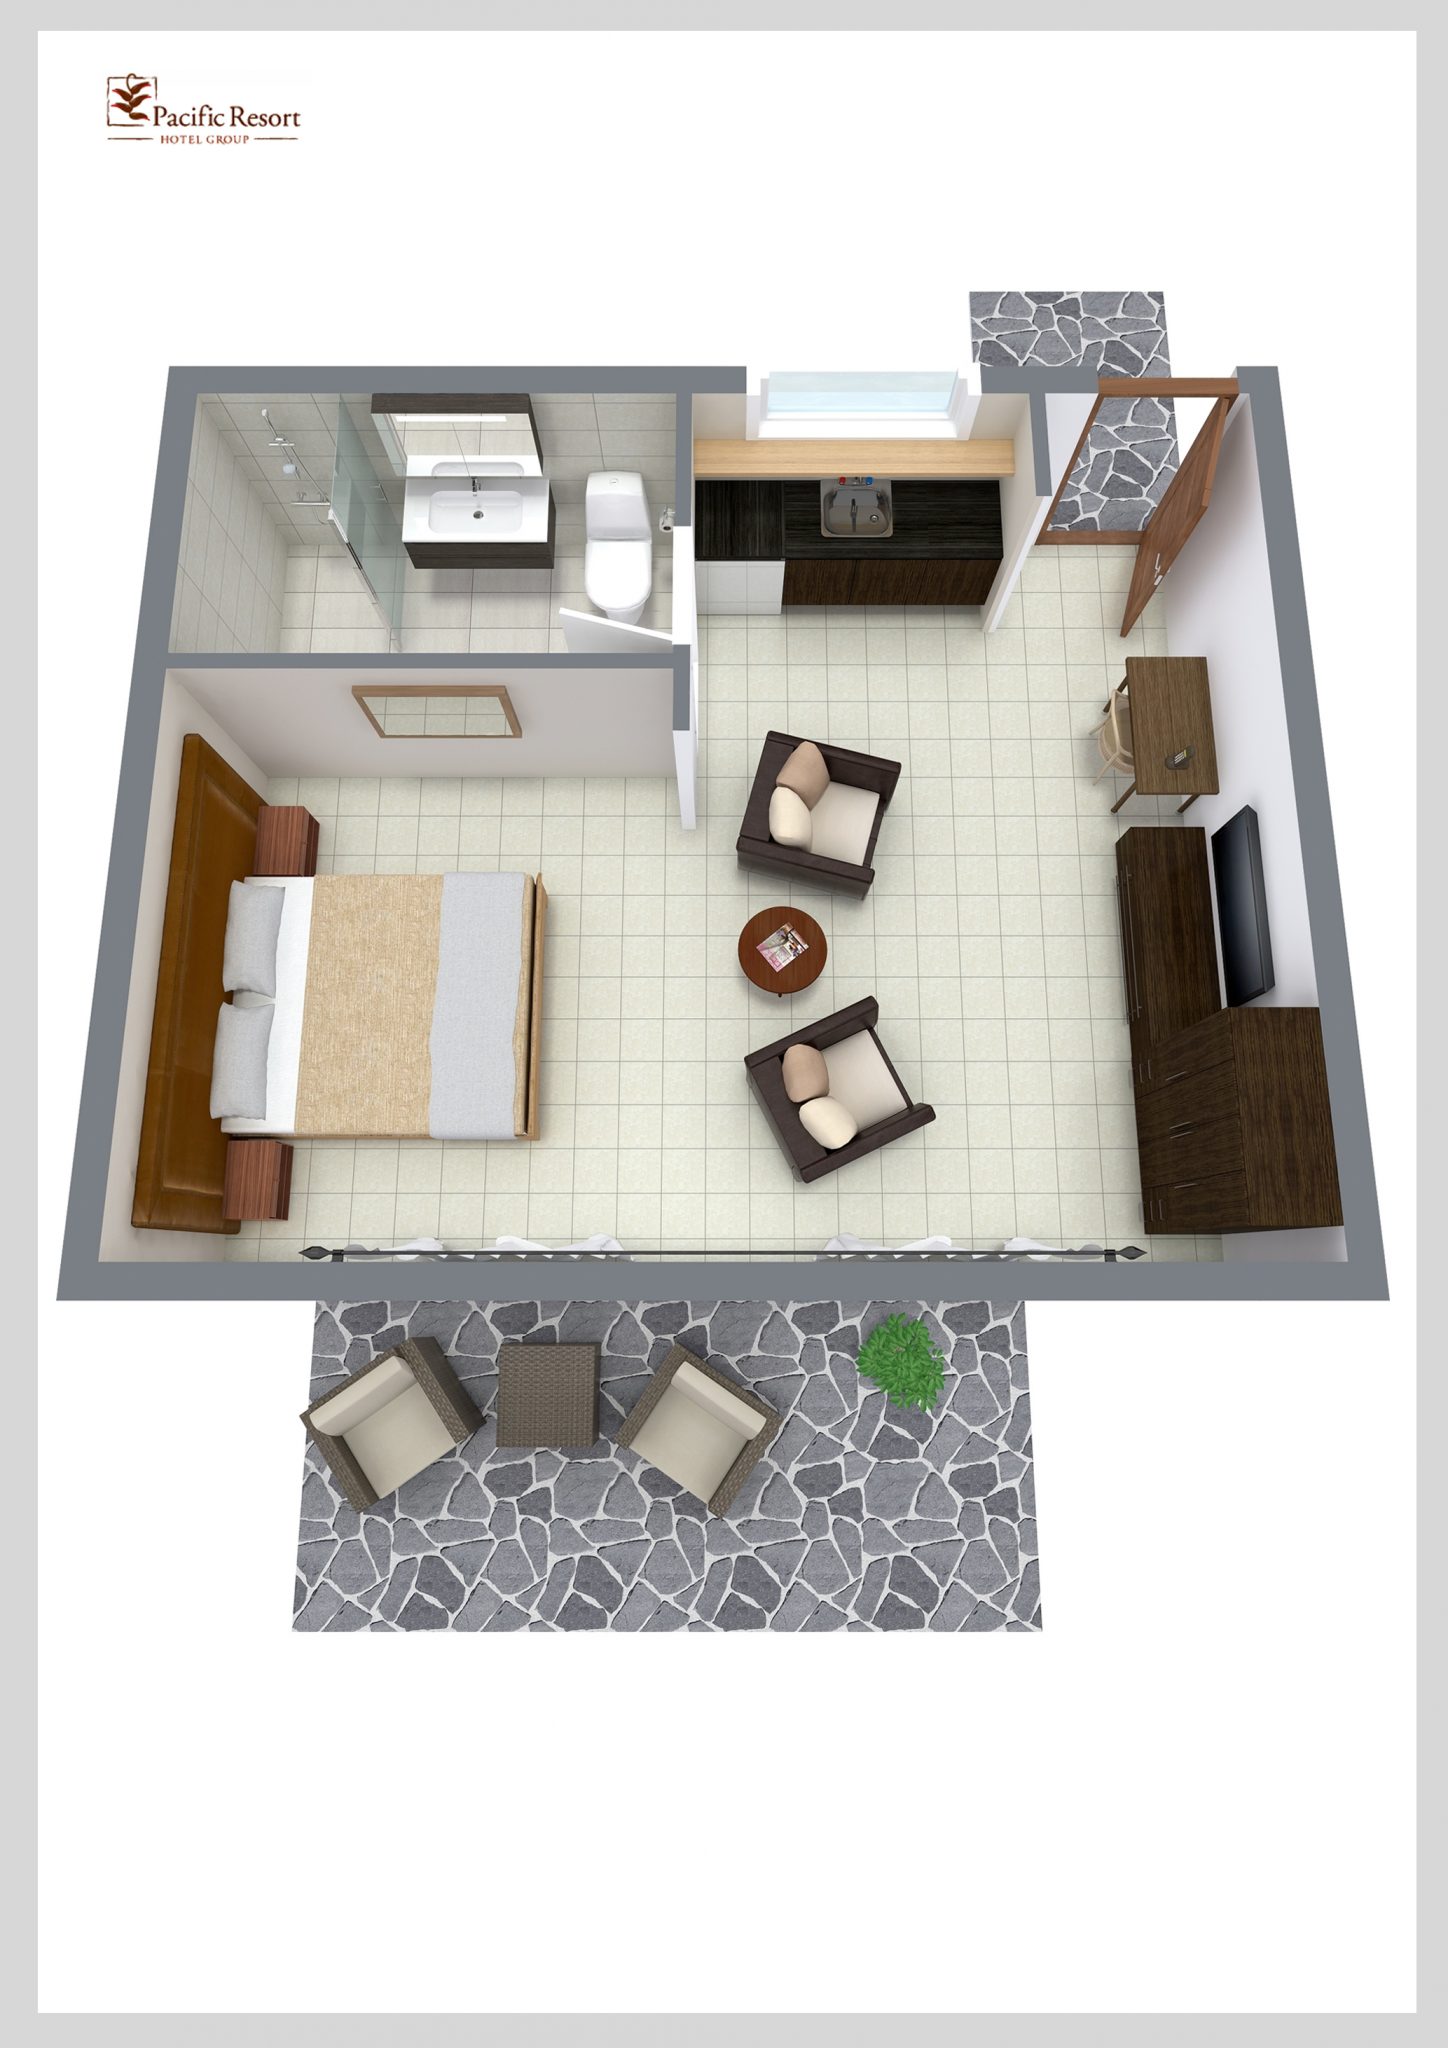 Standard Studio Room - Room Plan